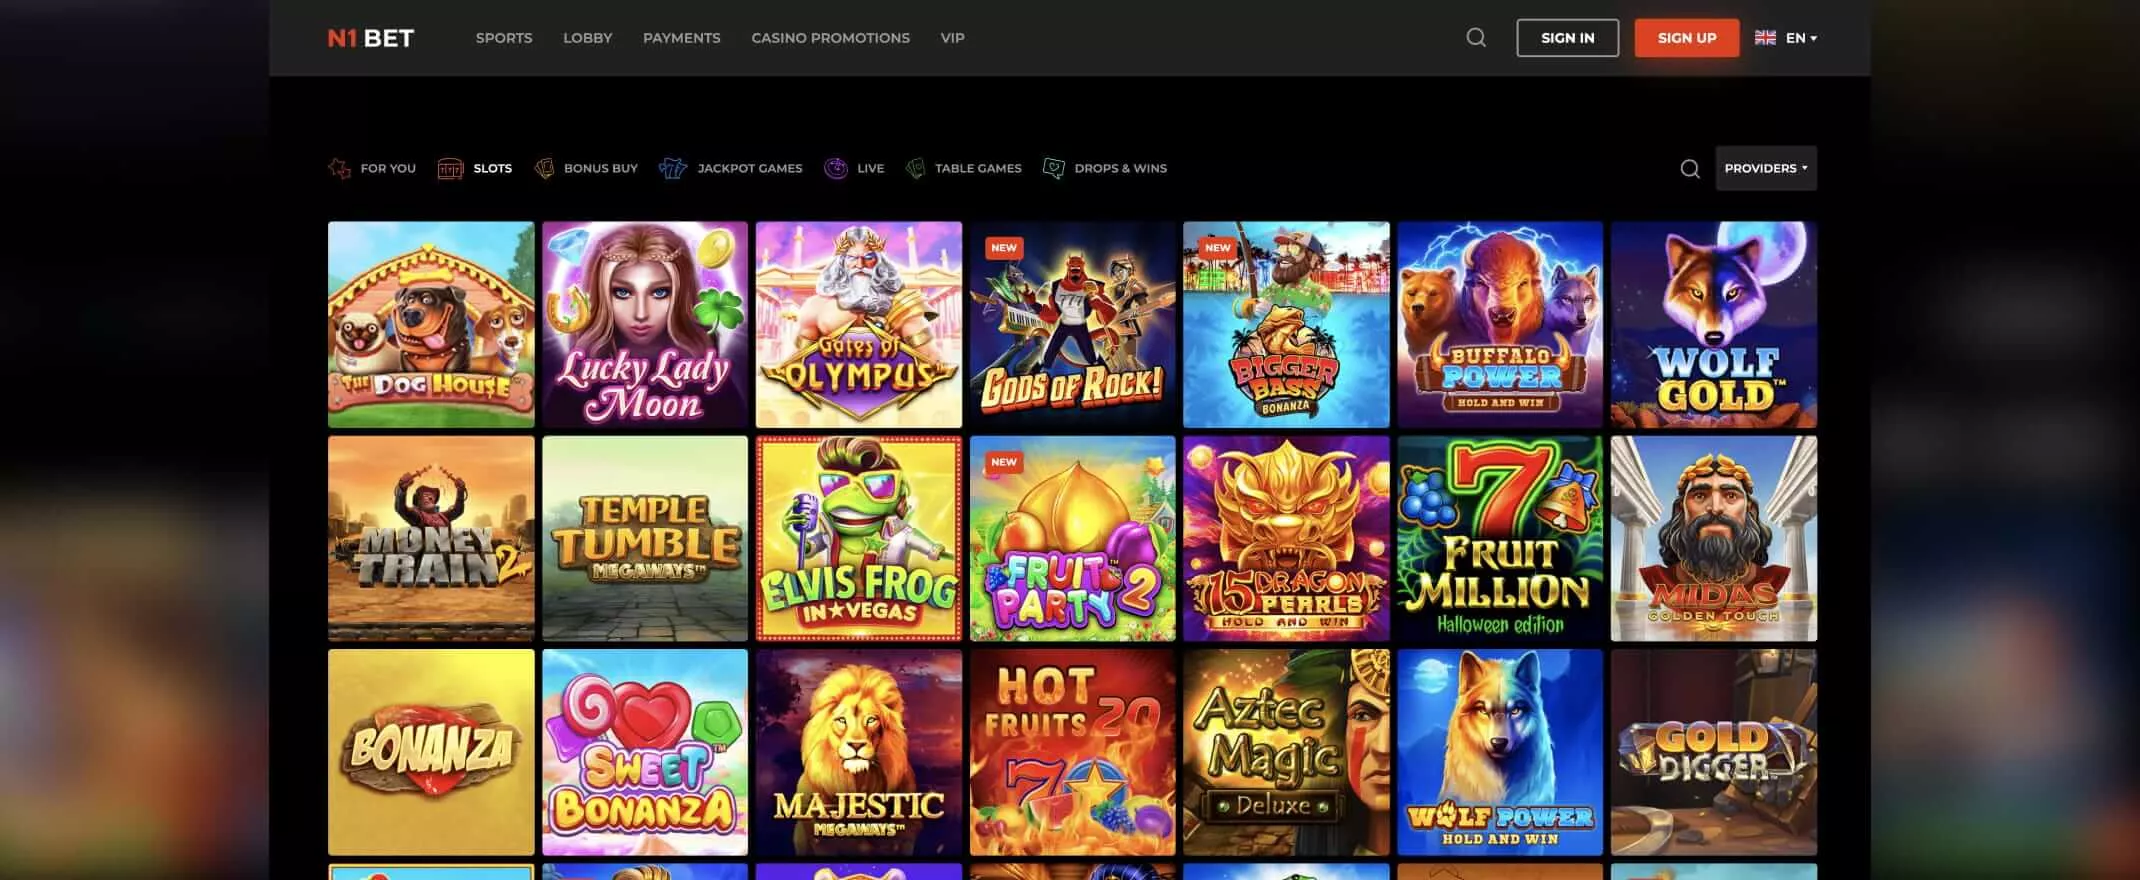 N1 bet casino games screenshot